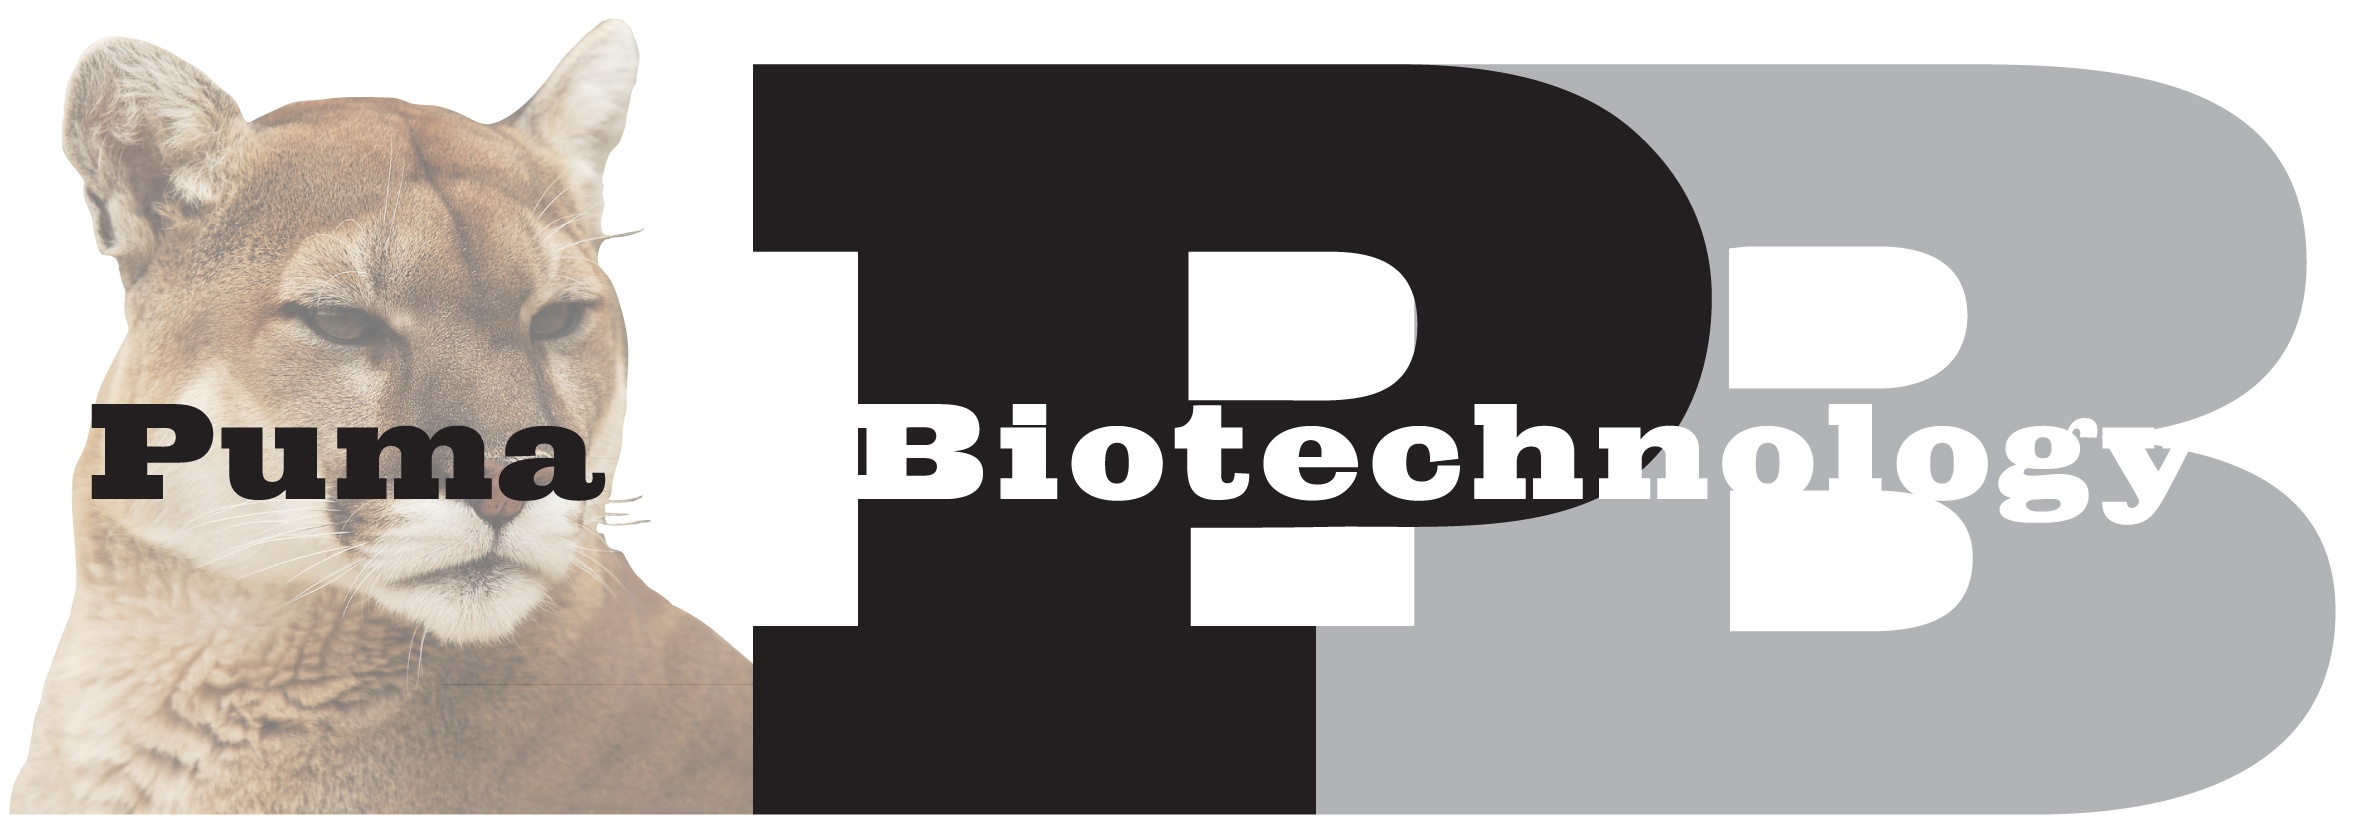 puma biotechnology aktie